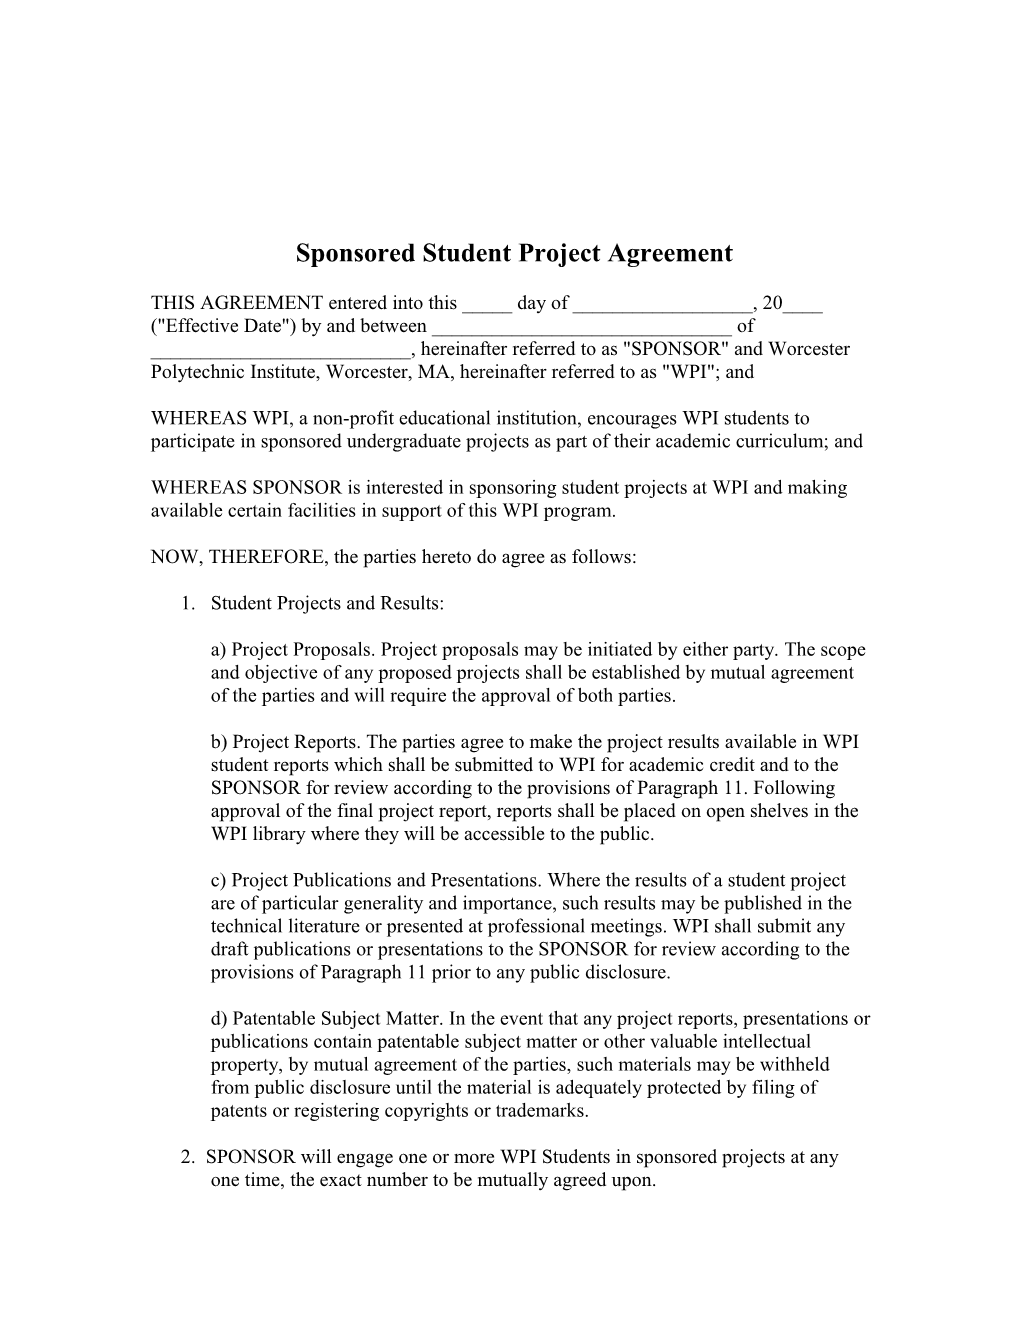 WPI Sponsored Student Project Agreement